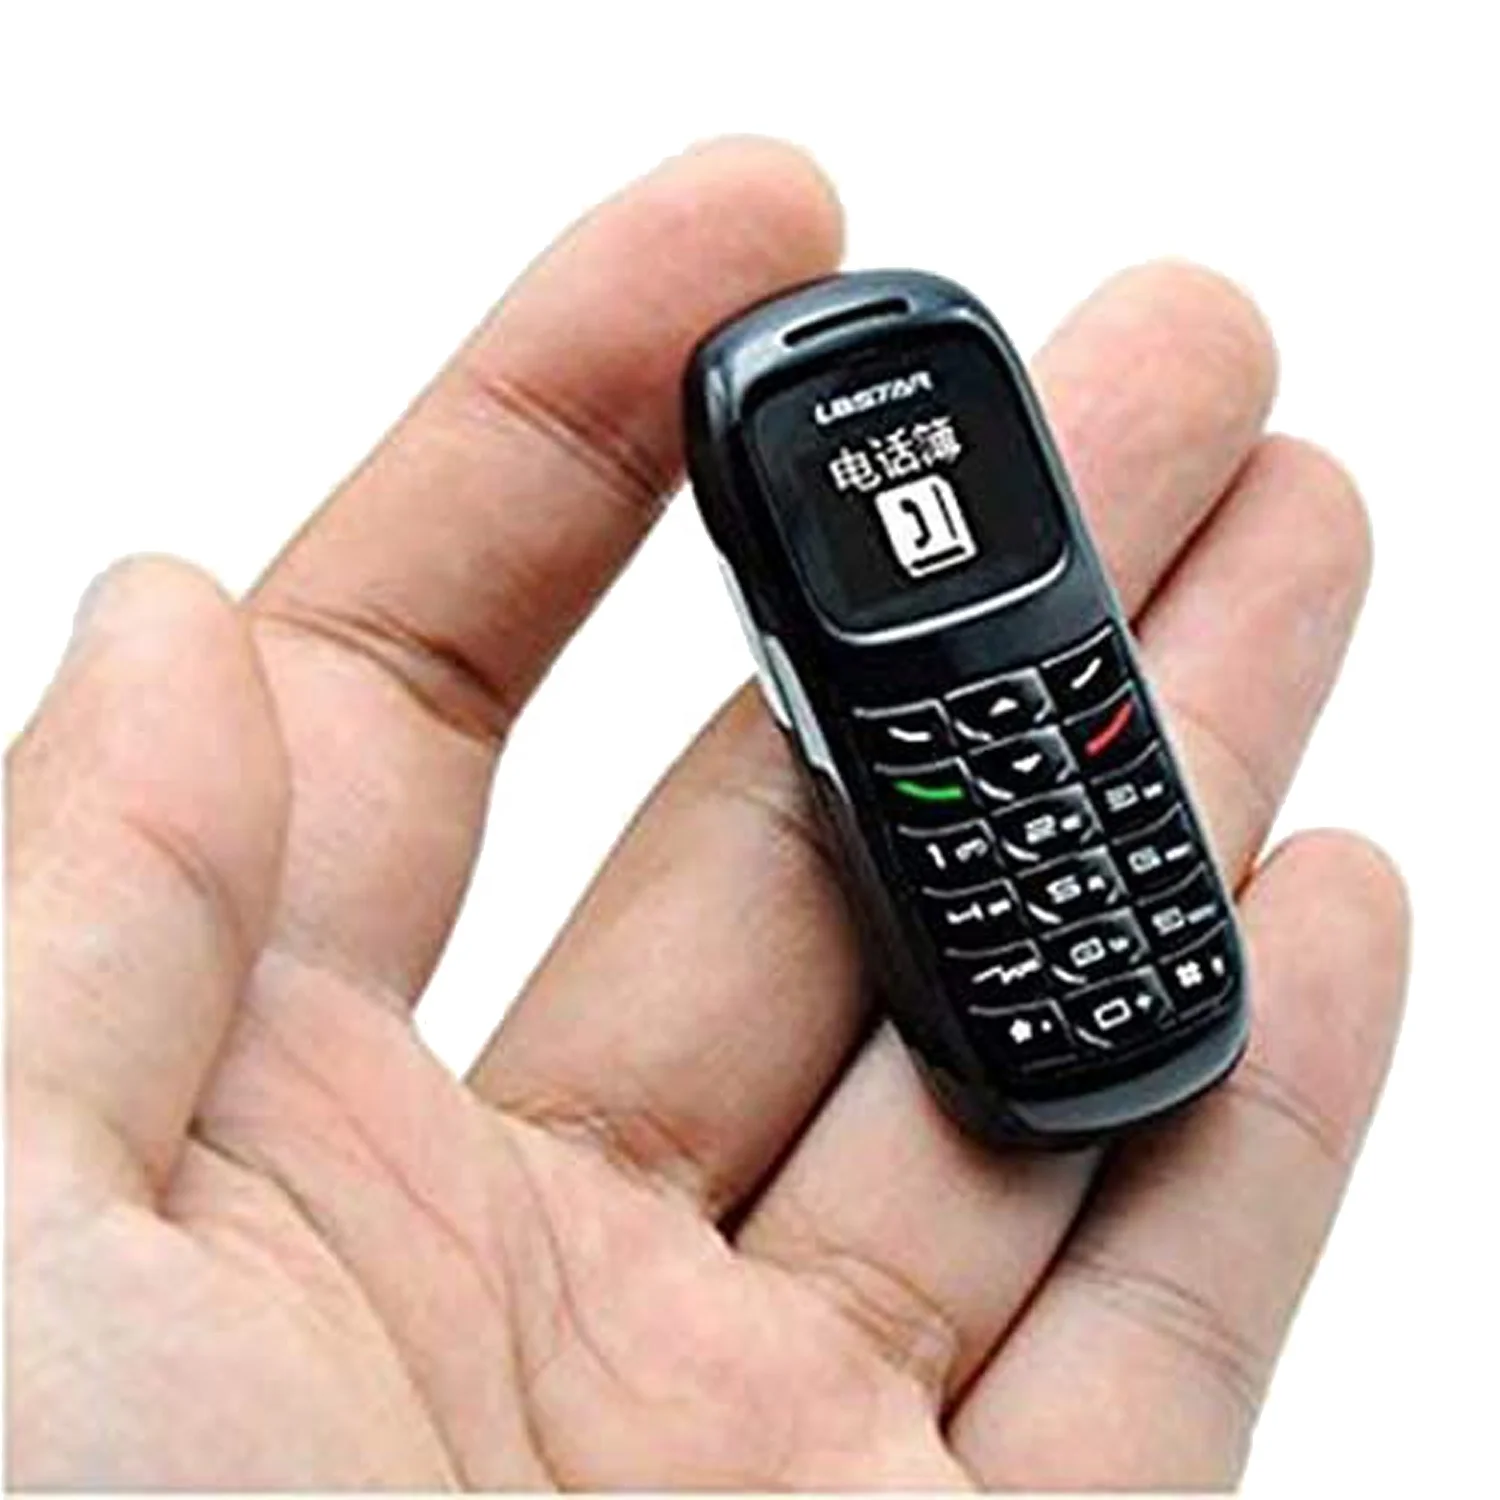 

L8Star GTStar BM70 Mini BT5.0 handset phone 0.66 inch Unlocked Mini Mobile Phone BT5.0 Earphone Dialer Single SIM Card